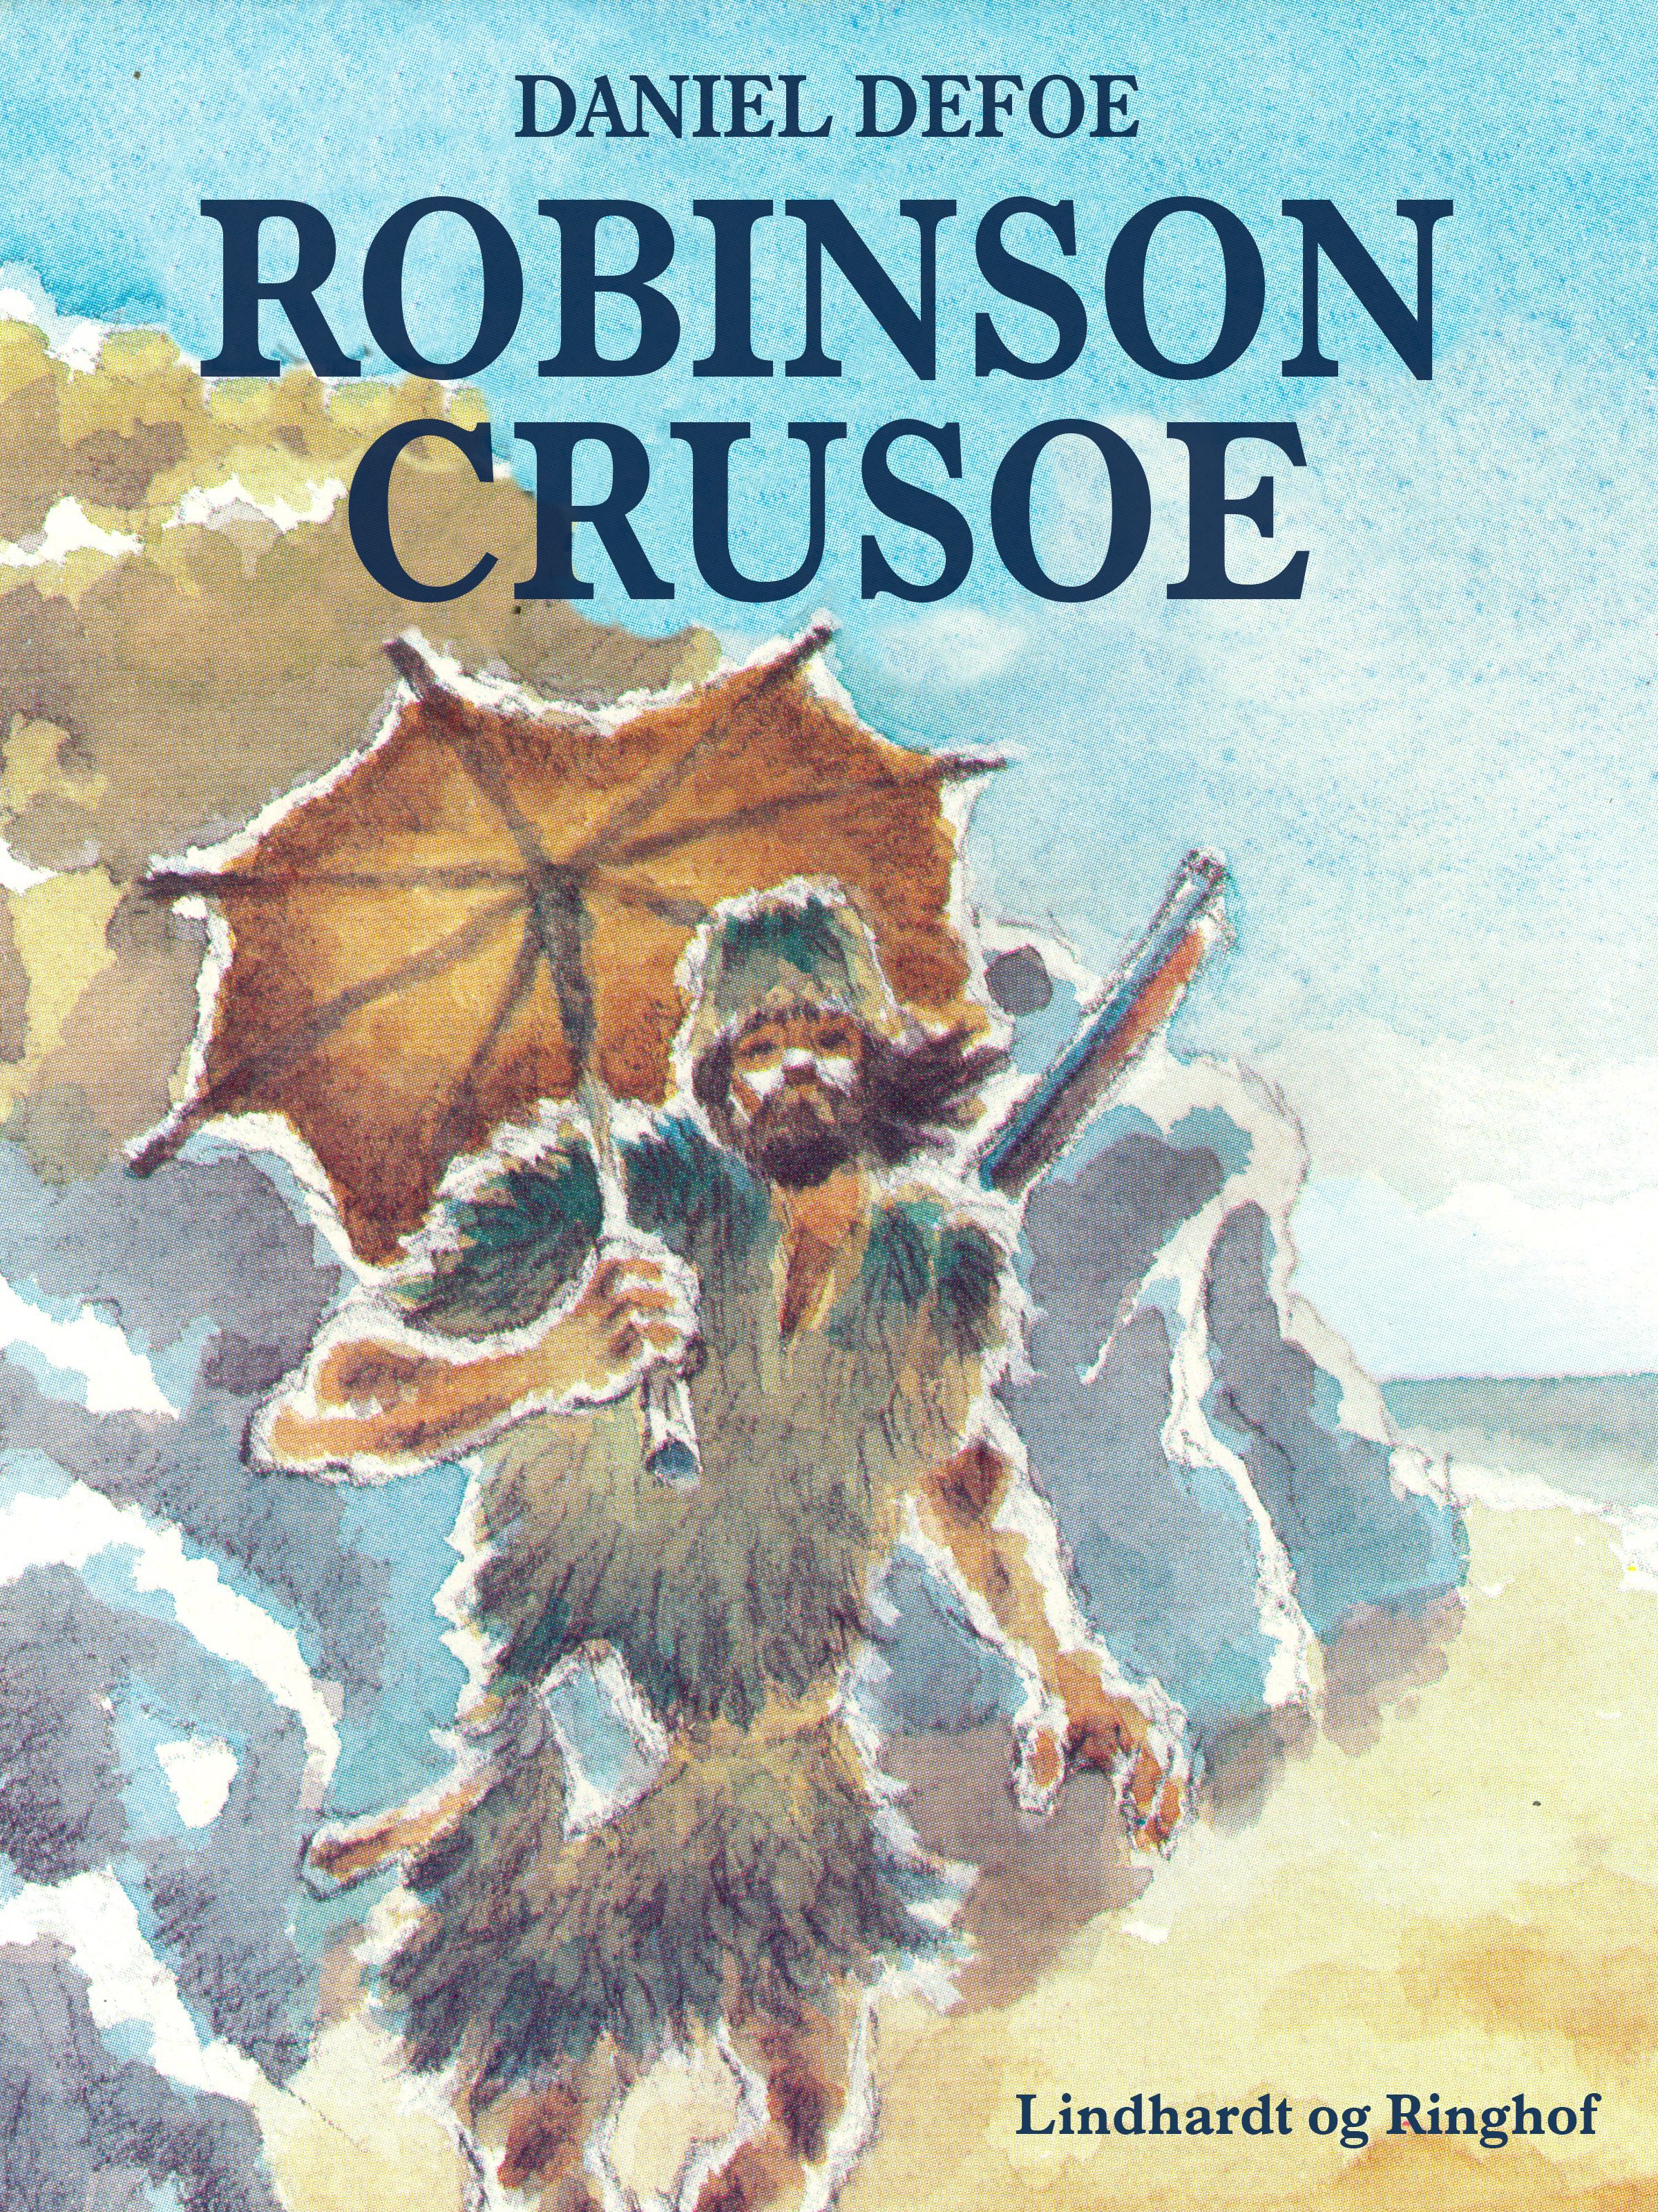 Robinson Crusoe, e-bog af Daniel Defoe